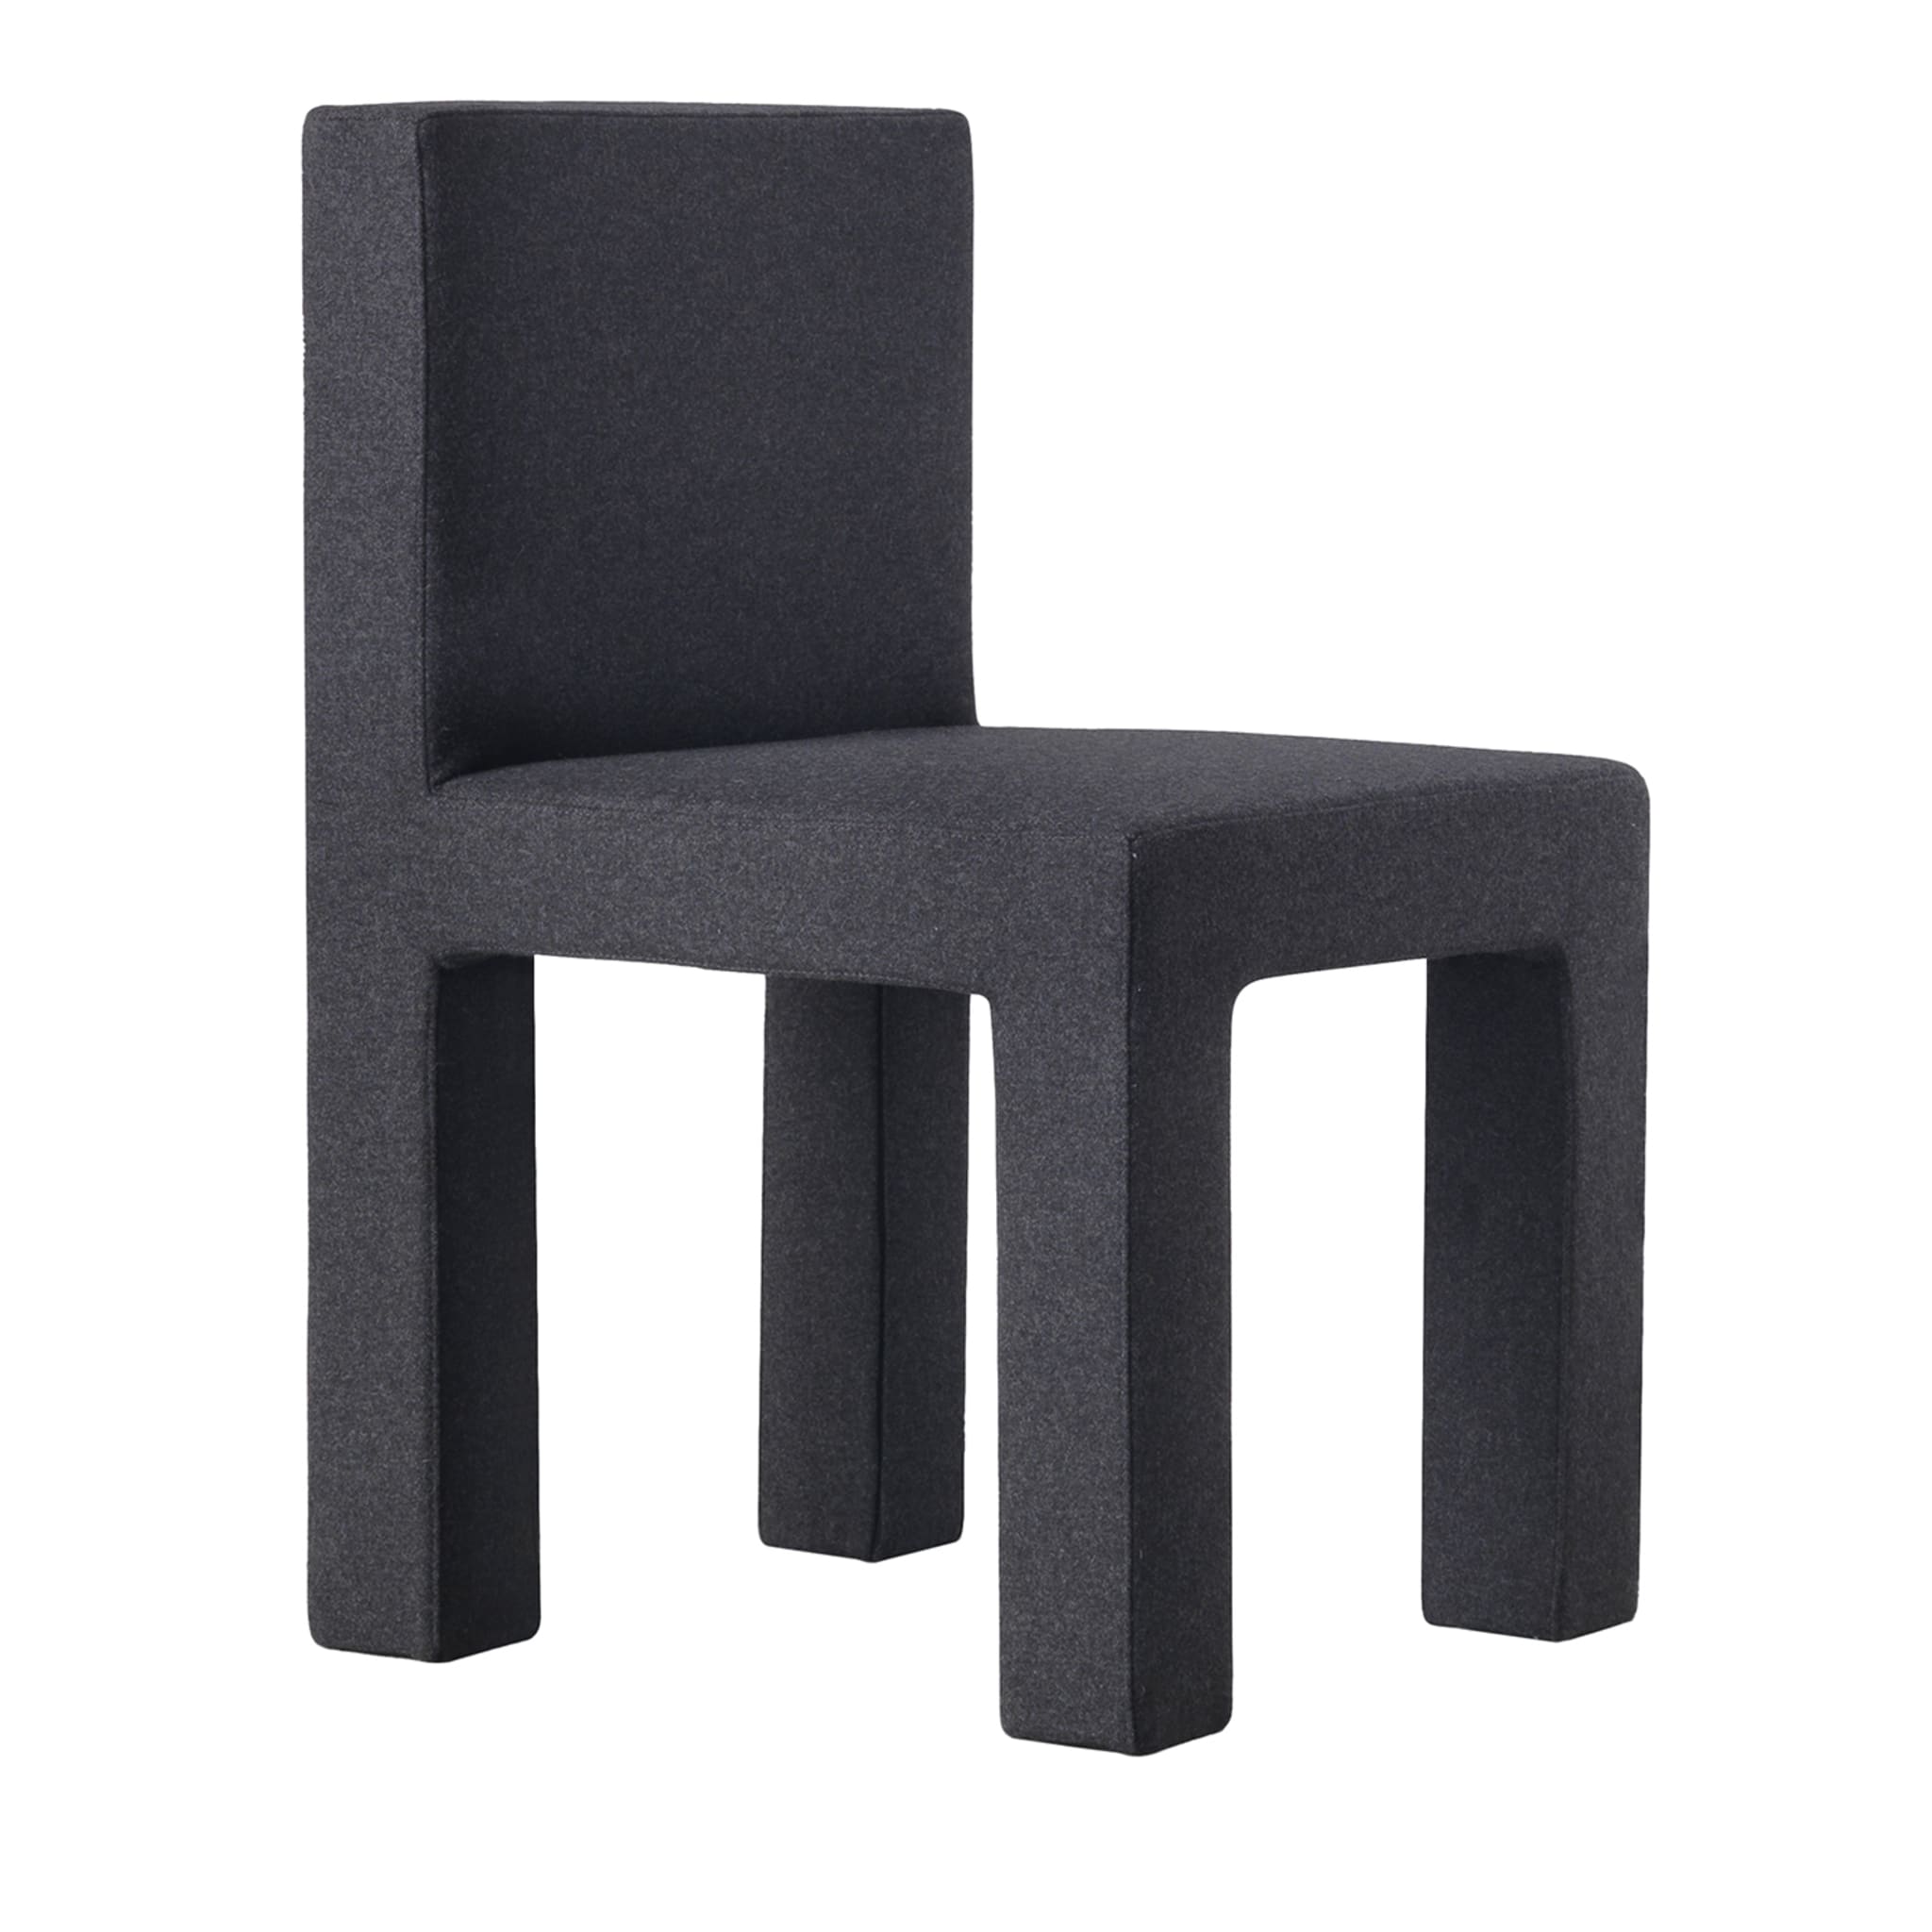 Quadrata Grauer Stuhl von Dainelli Studio - Hauptansicht